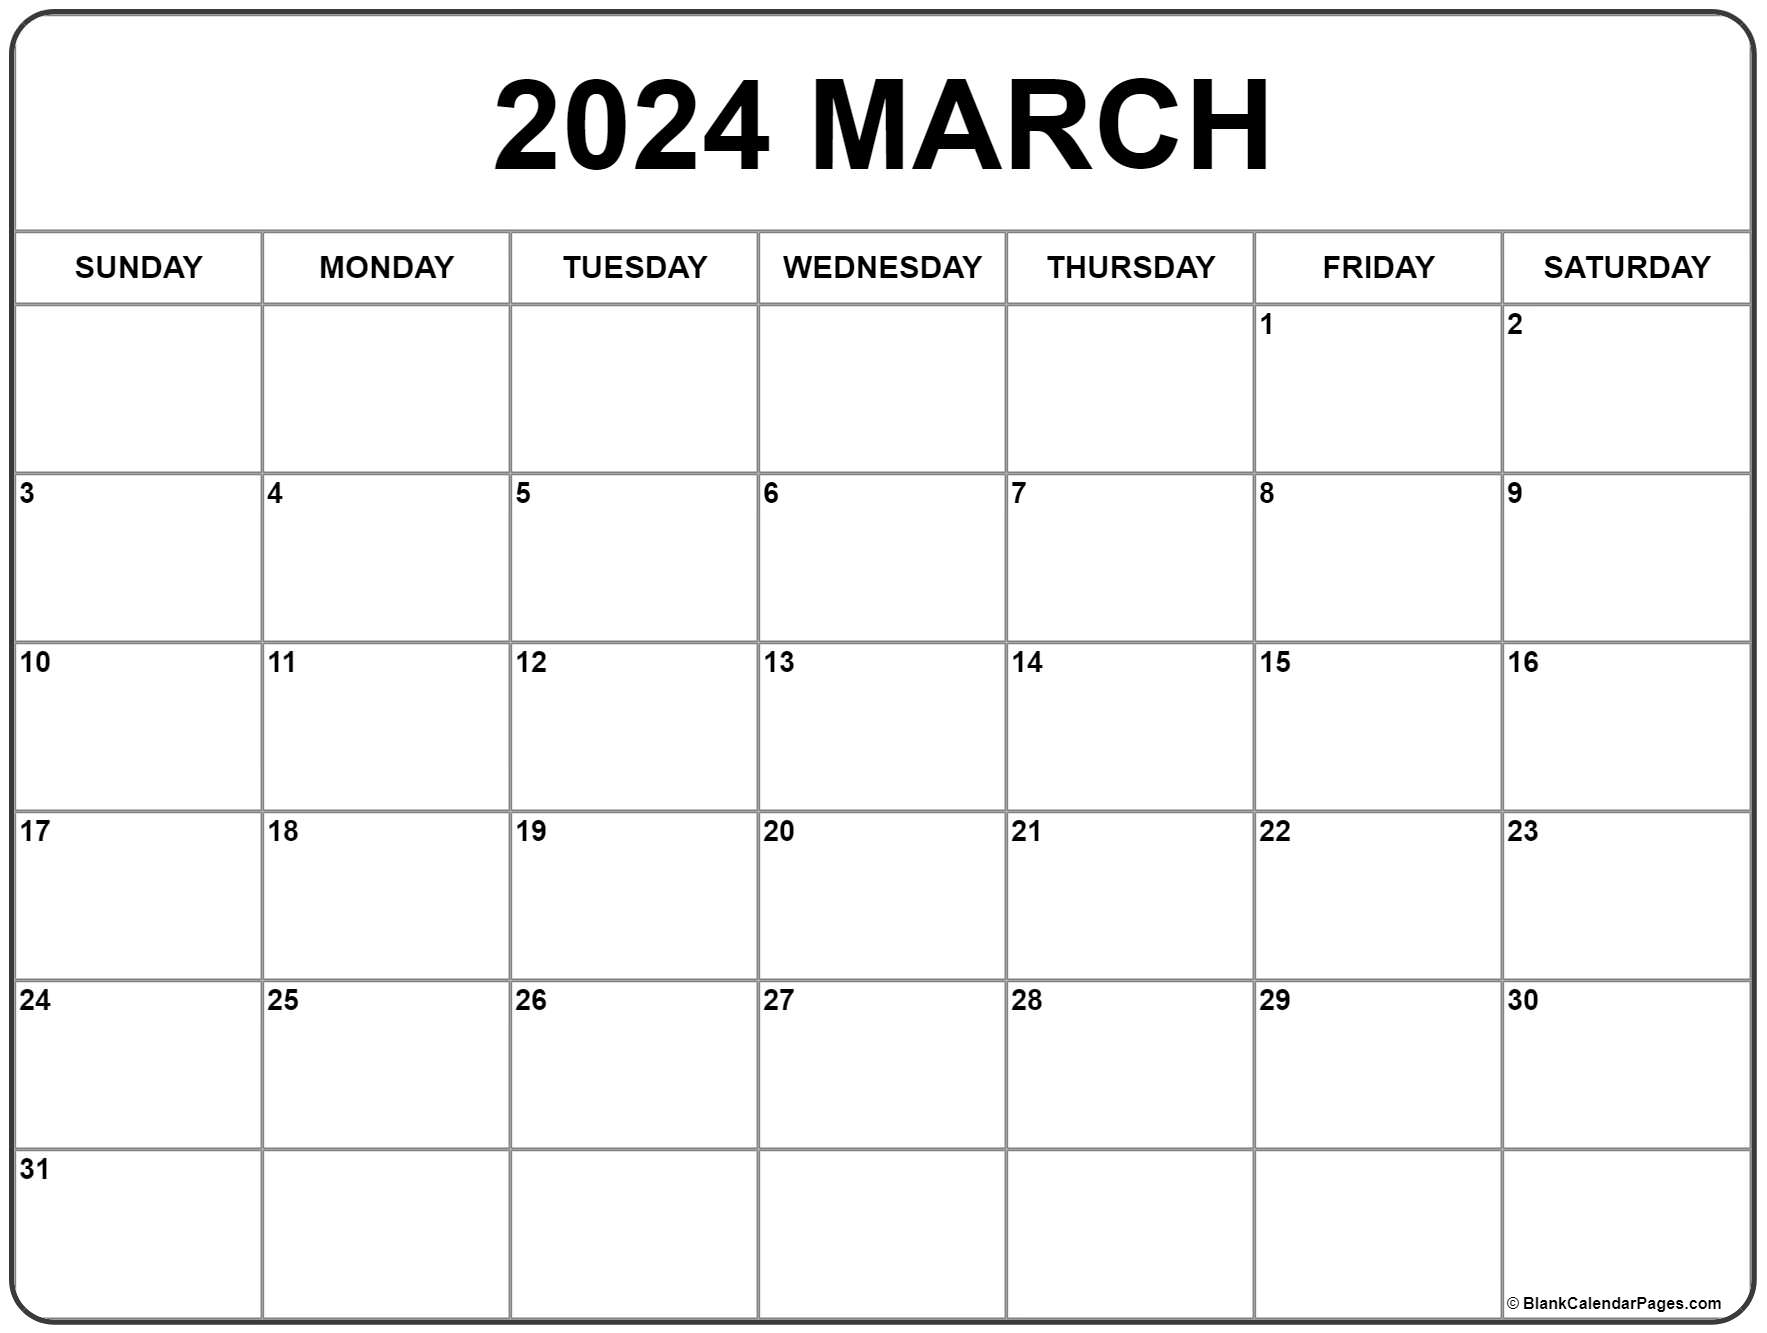 March 2022 Schedule March 2022 Calendar | Free Printable Calendar Templates